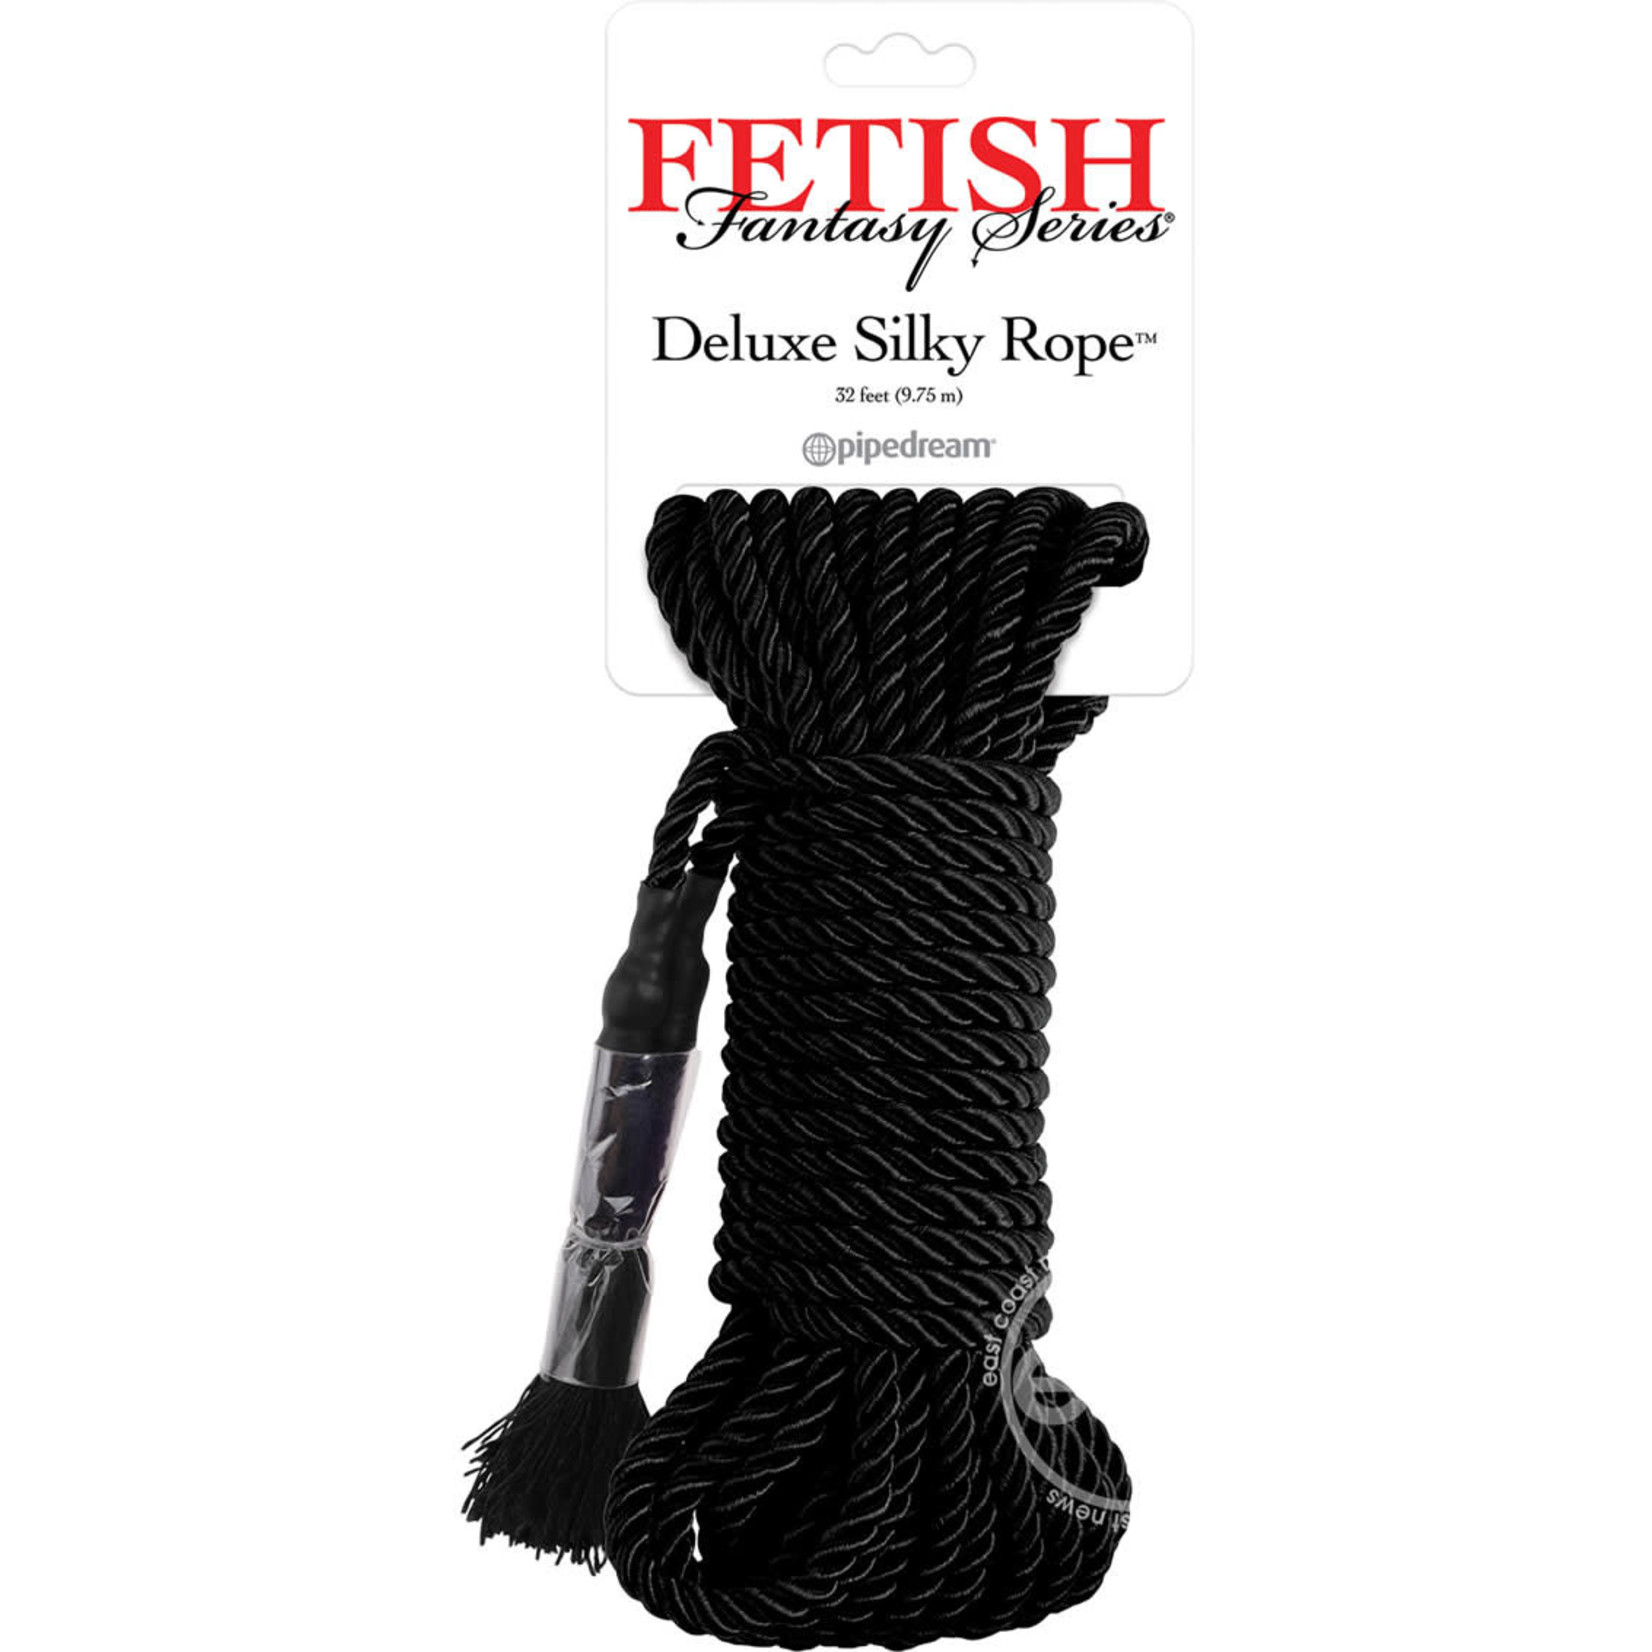 Festish Fantasy Series Deluxe Silk Rope Black 32 Feet